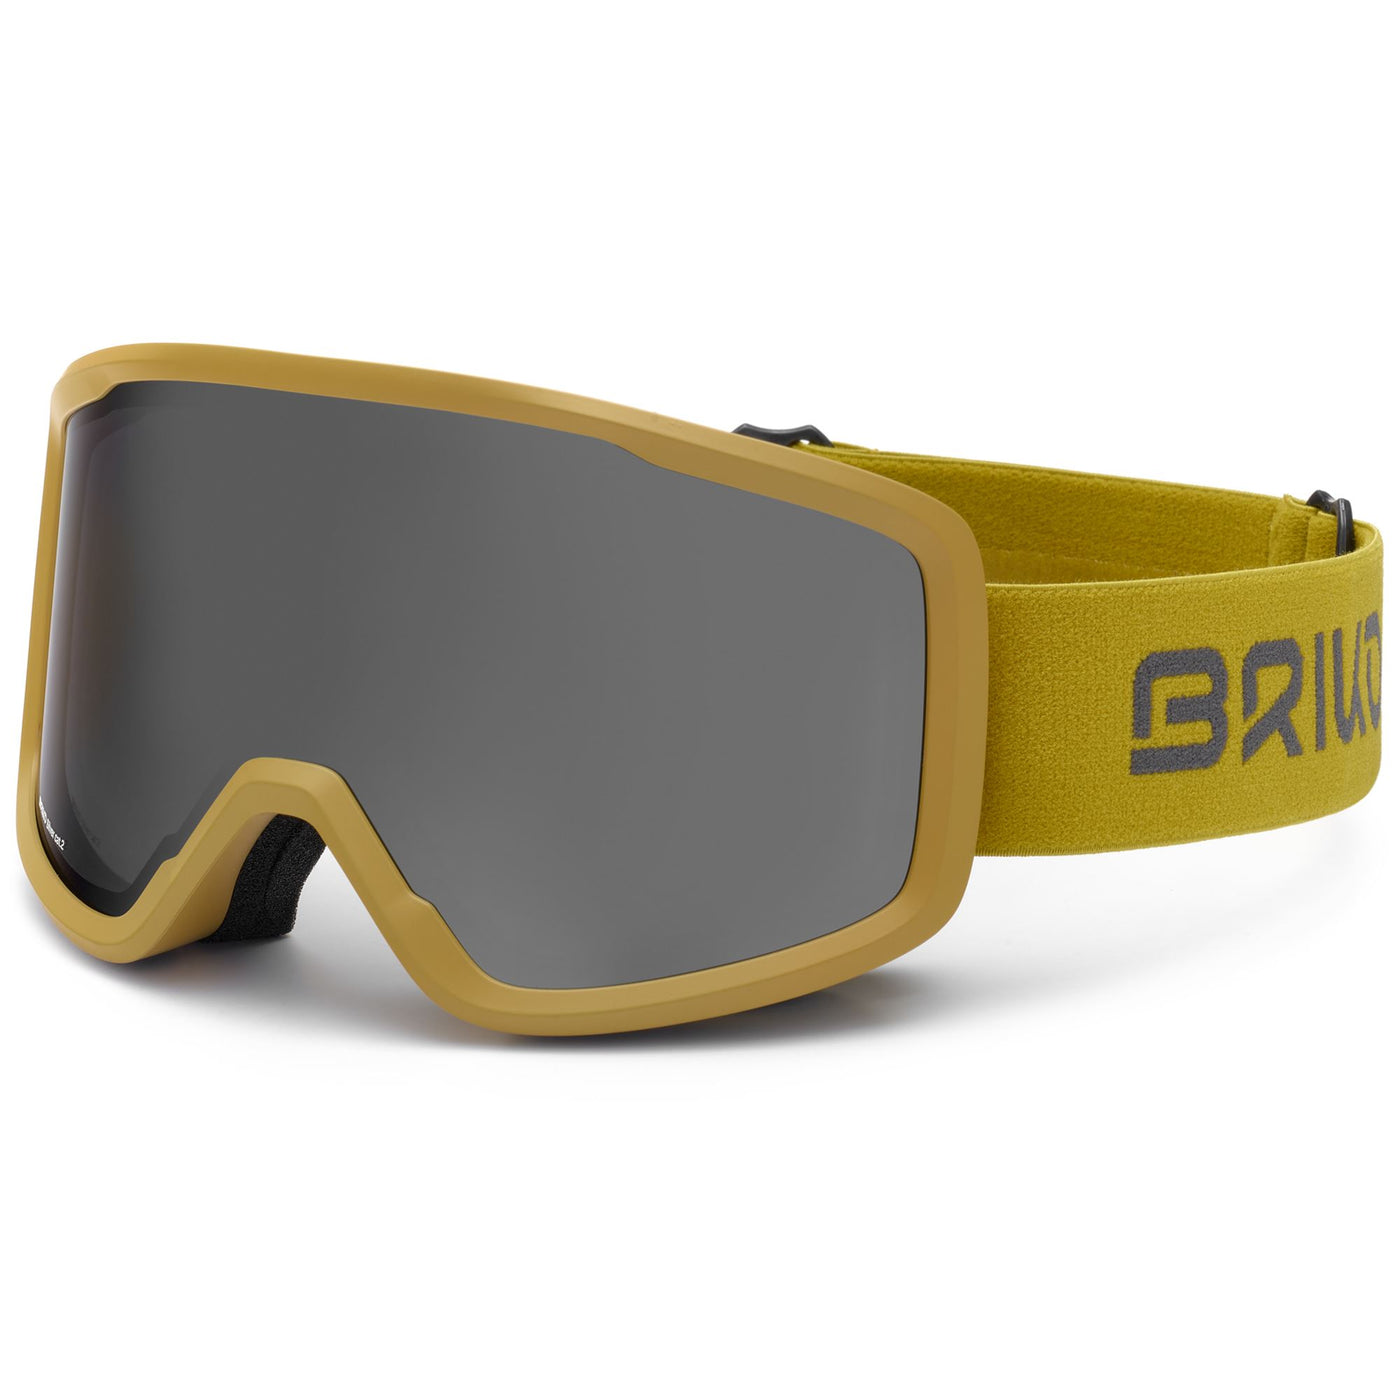 Goggles Unisex CHAMONIX Ski  Goggles YELLOW SAHARA - SM2 Dressed Side (jpg Rgb)		